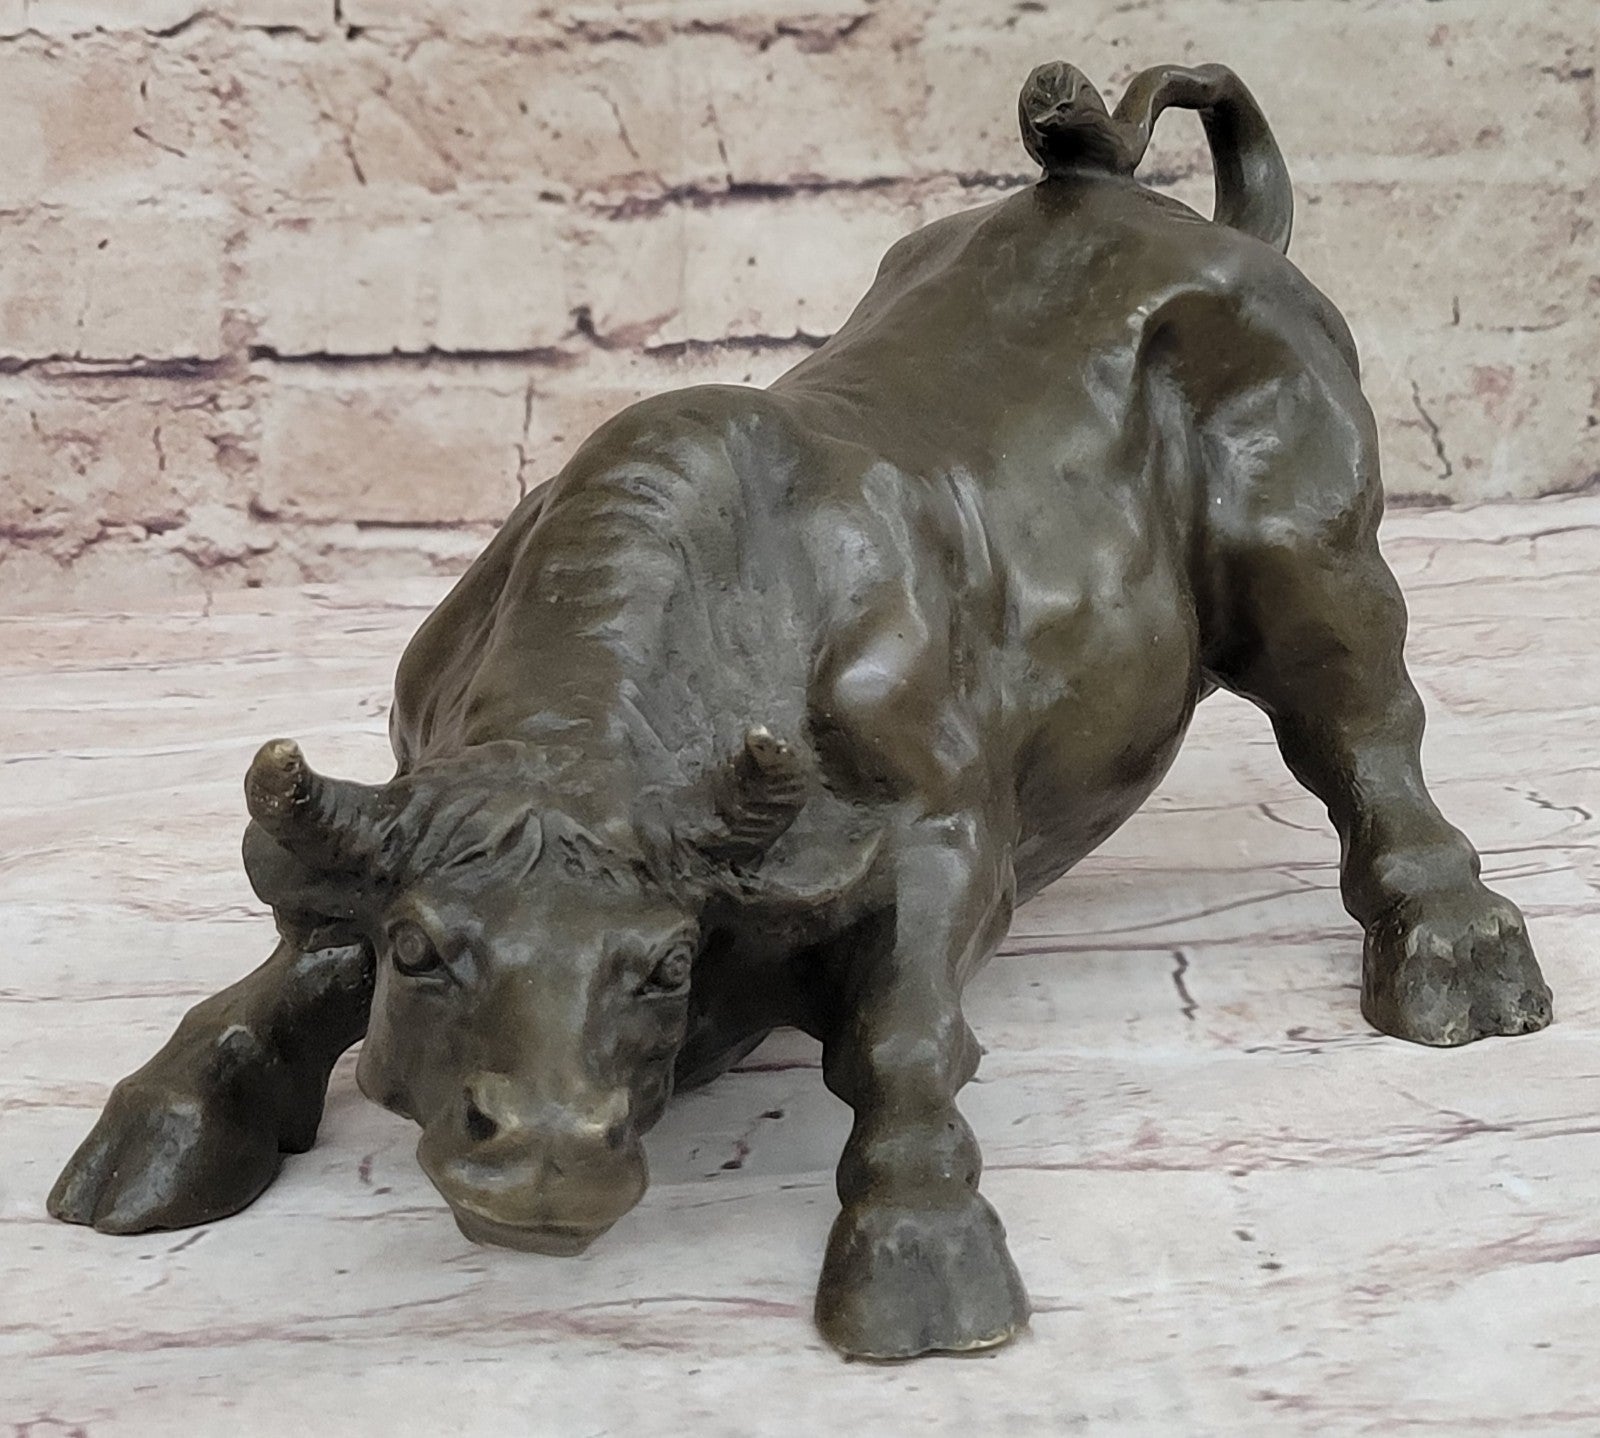 Art Deco Original Stock Market Bull Bronze Sculpture Wall Street Figurine Figure